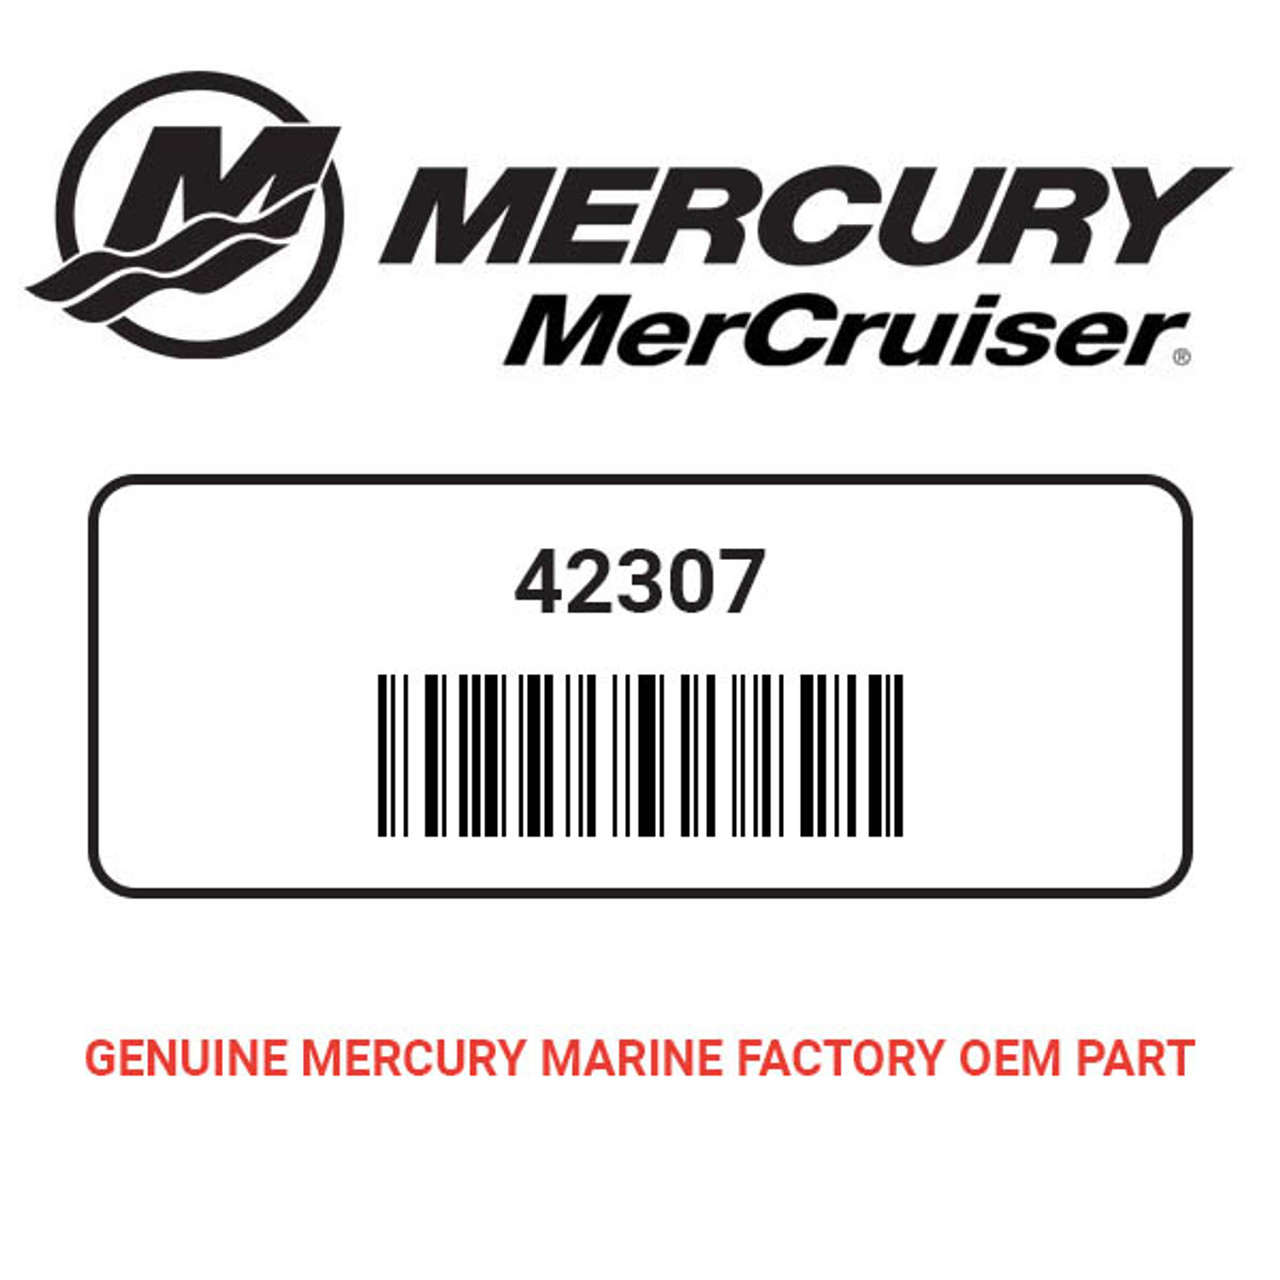 Mercury Mercruiser 12-42307 Washer Wholesale Marine